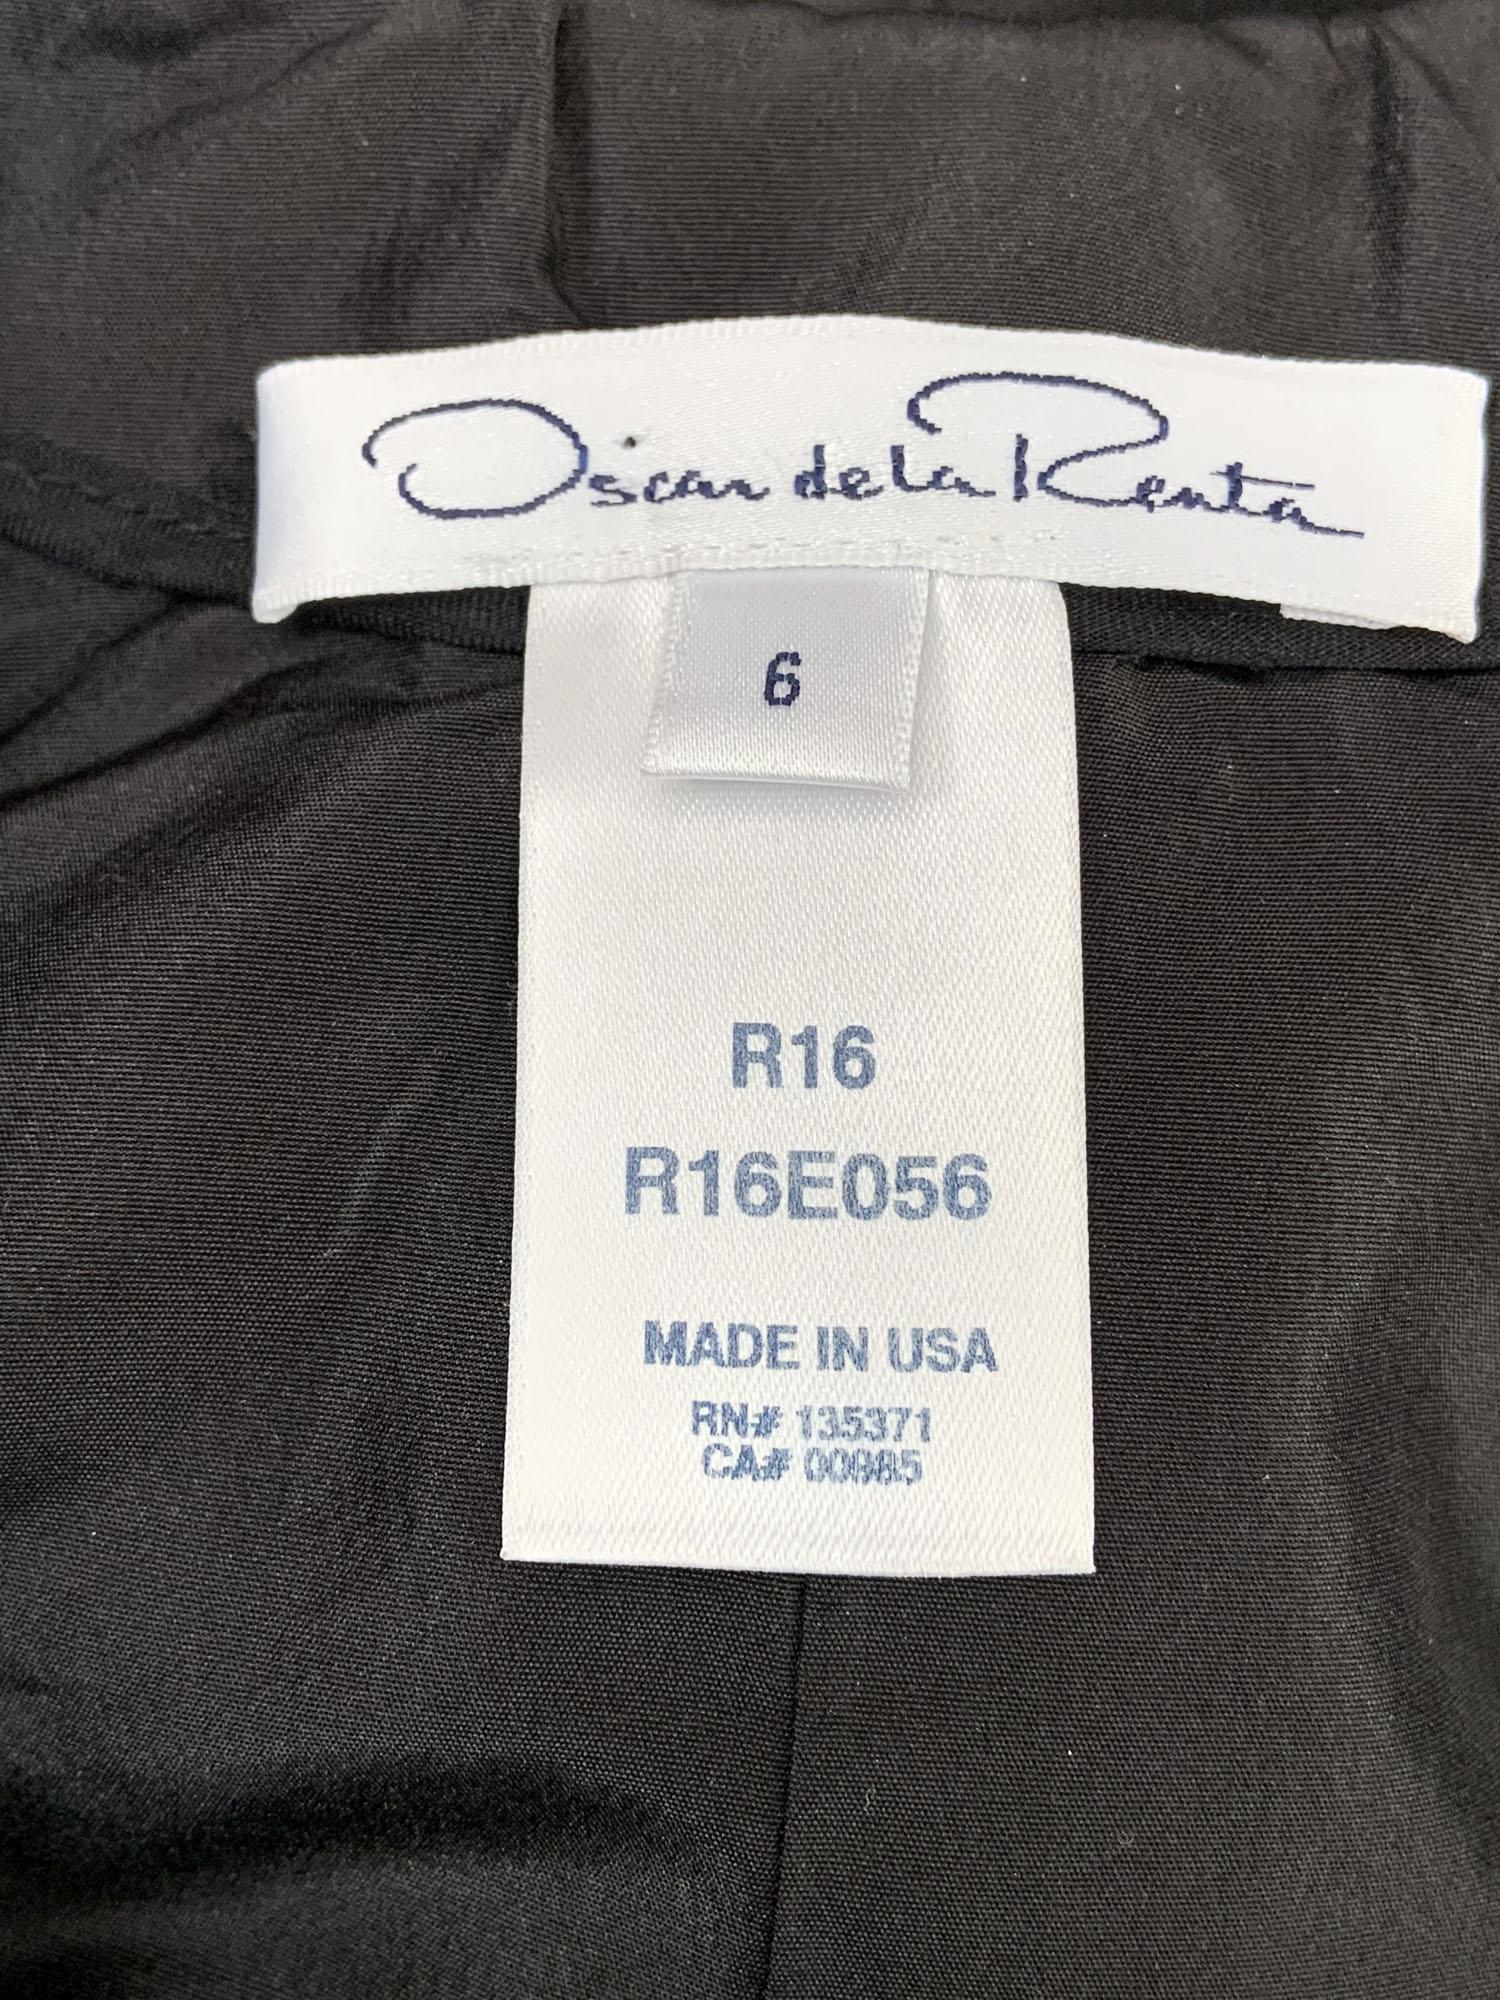 Oscar de la Renta Black Embellished Lace Taffeta Silk Gown Dress US 6 For Sale 7